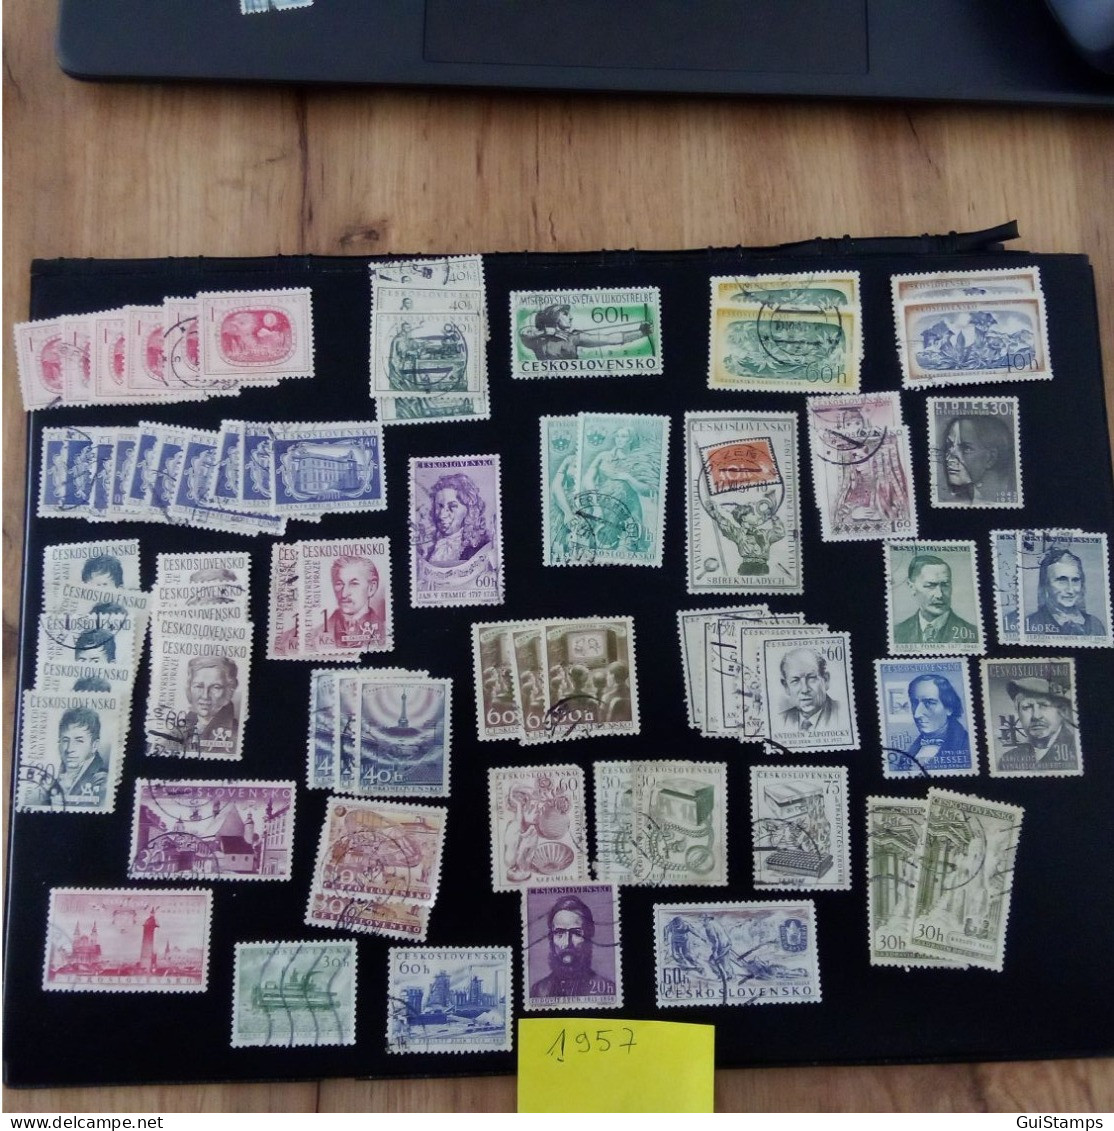 Stamps czechoslovakia 1950 do 1959 - Rare Selection small price